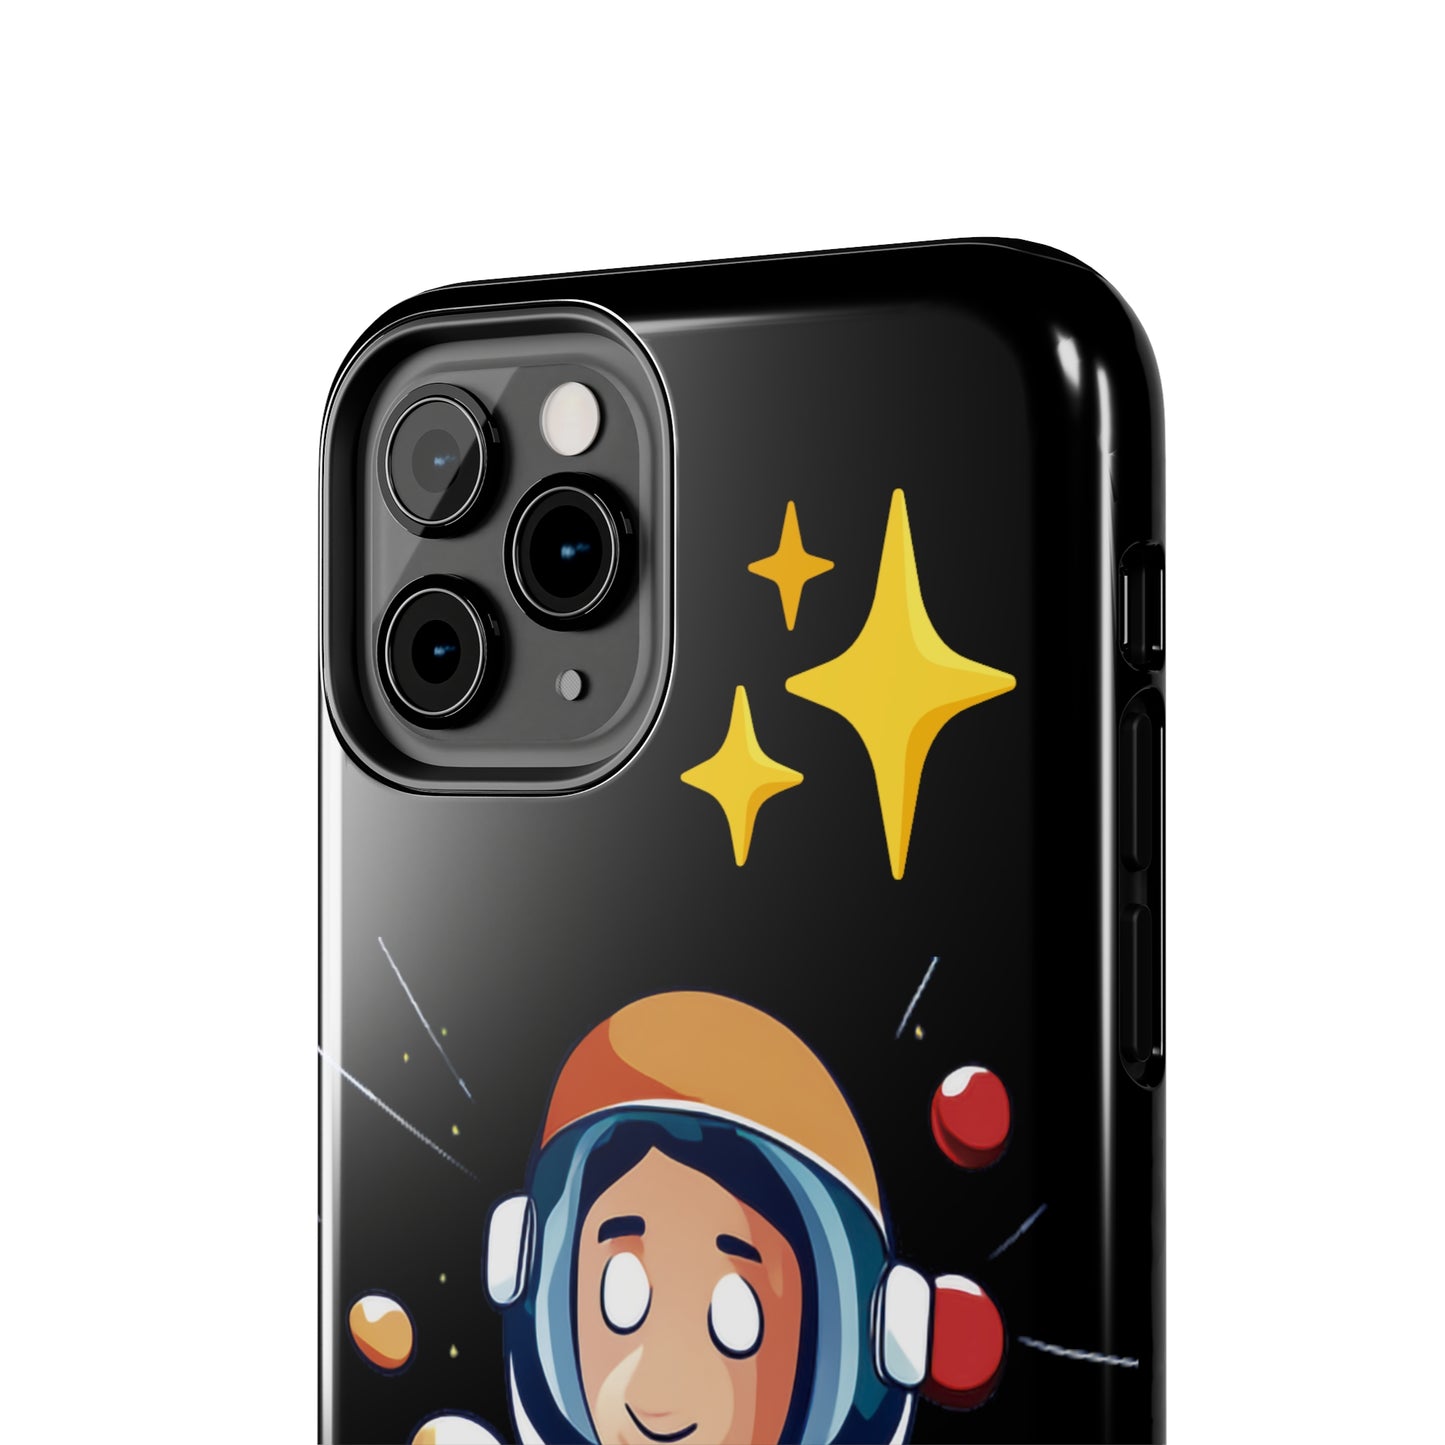 AstroCel-4 Tough iPhone Cases